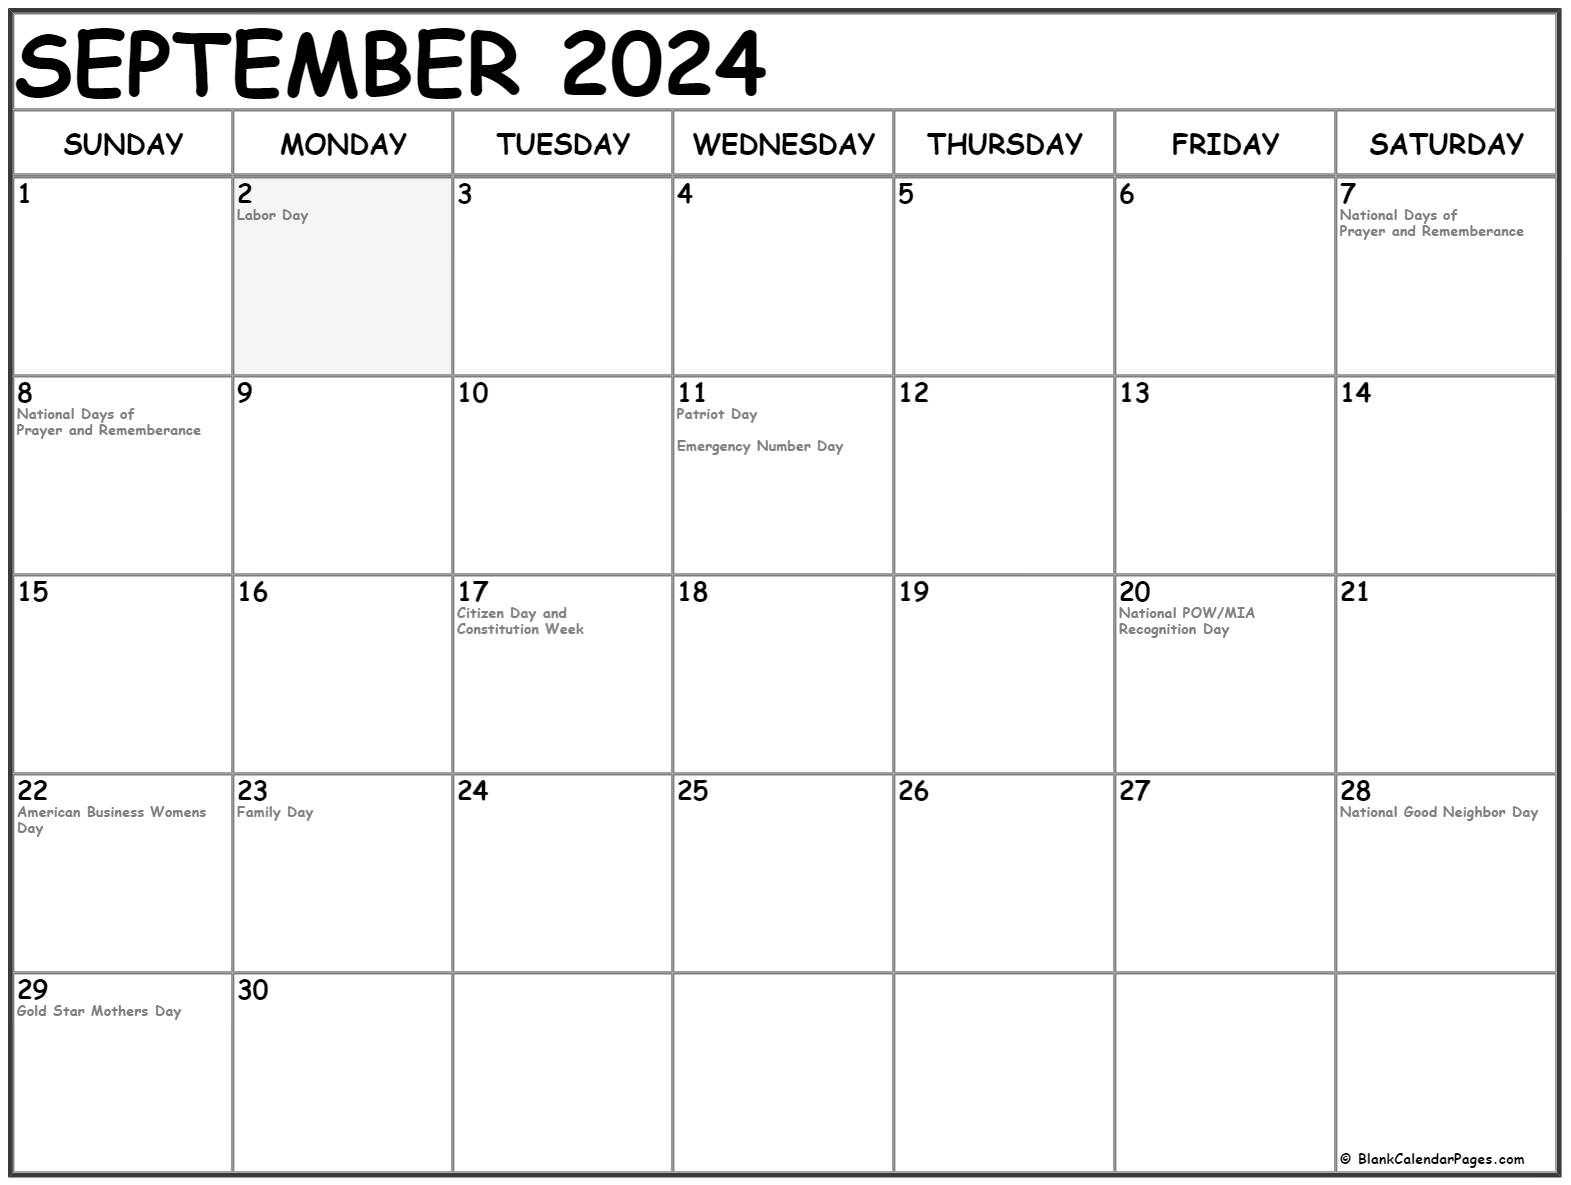 September 2022 Calendar Holidays September 2022 With Holidays Calendar